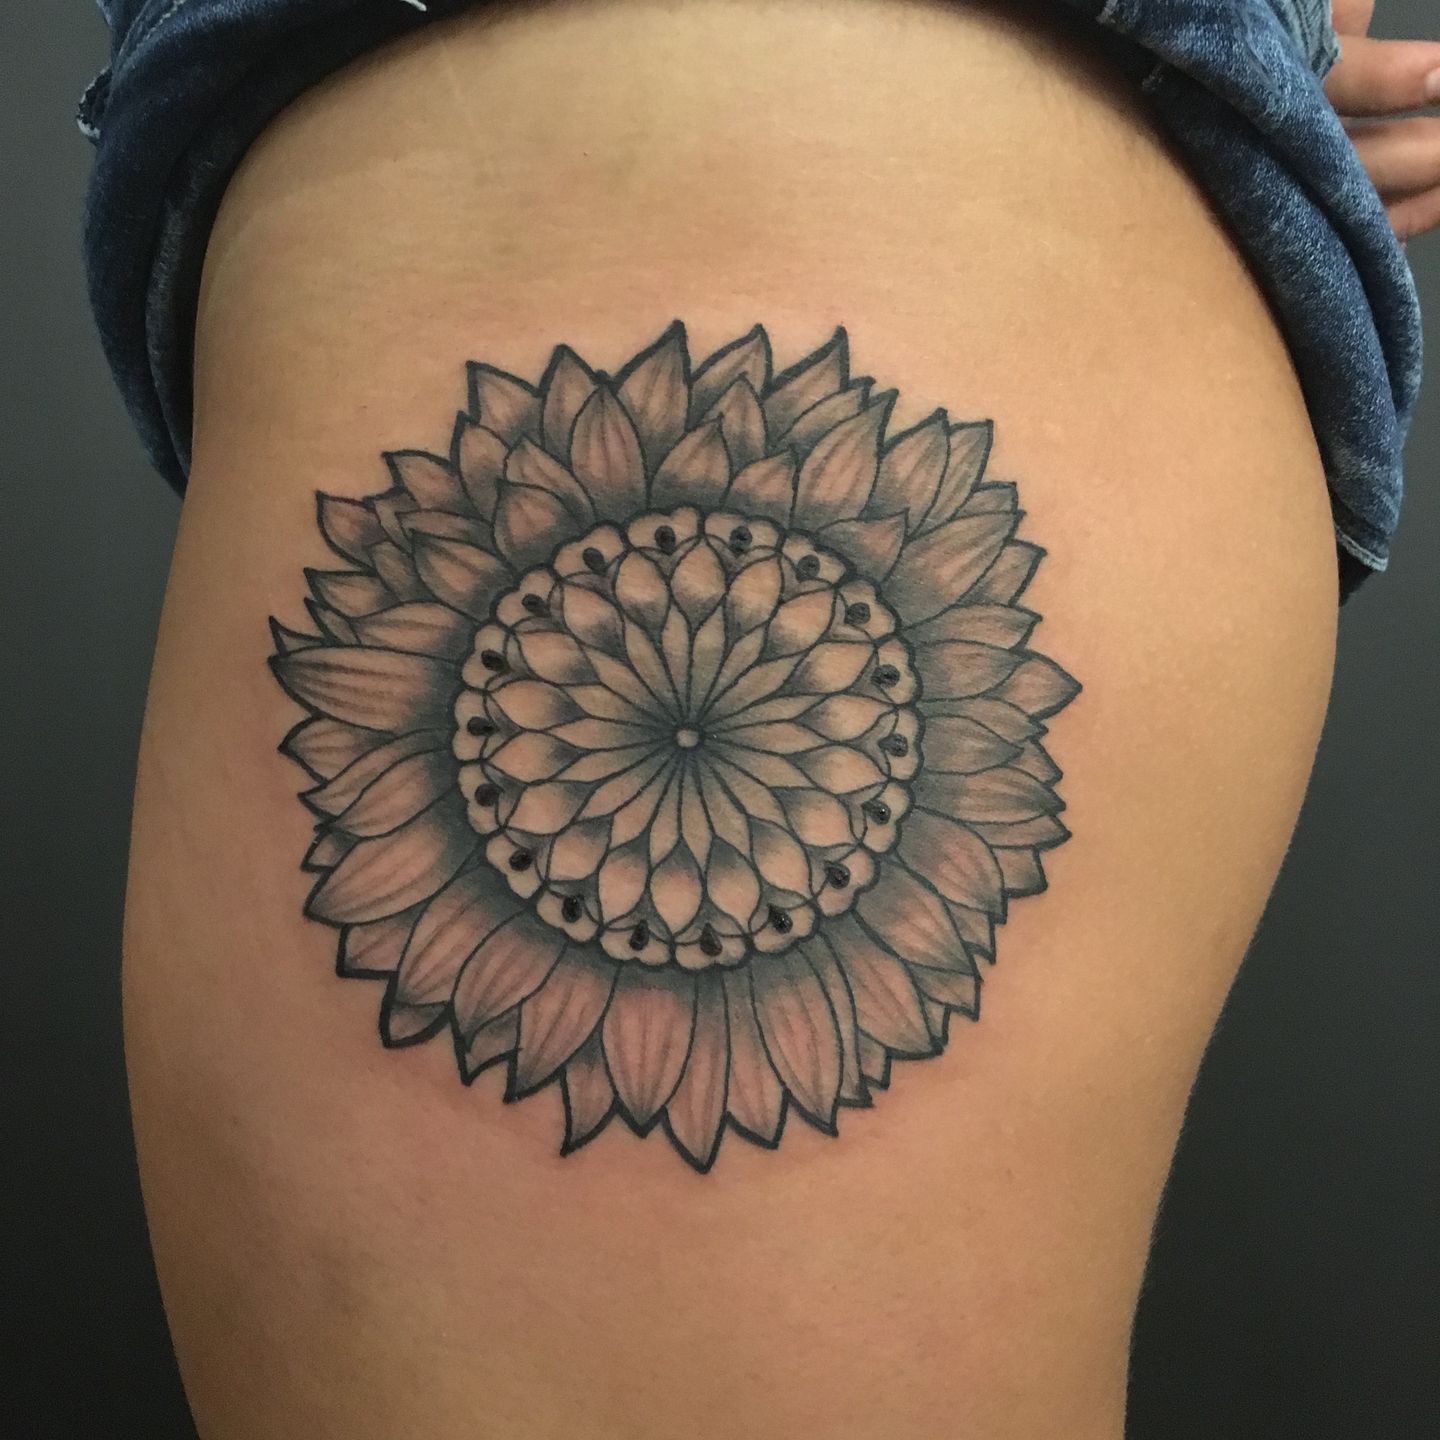 Sunflower Mandala Tattoo on Shoulder  Best Tattoo Ideas Gallery